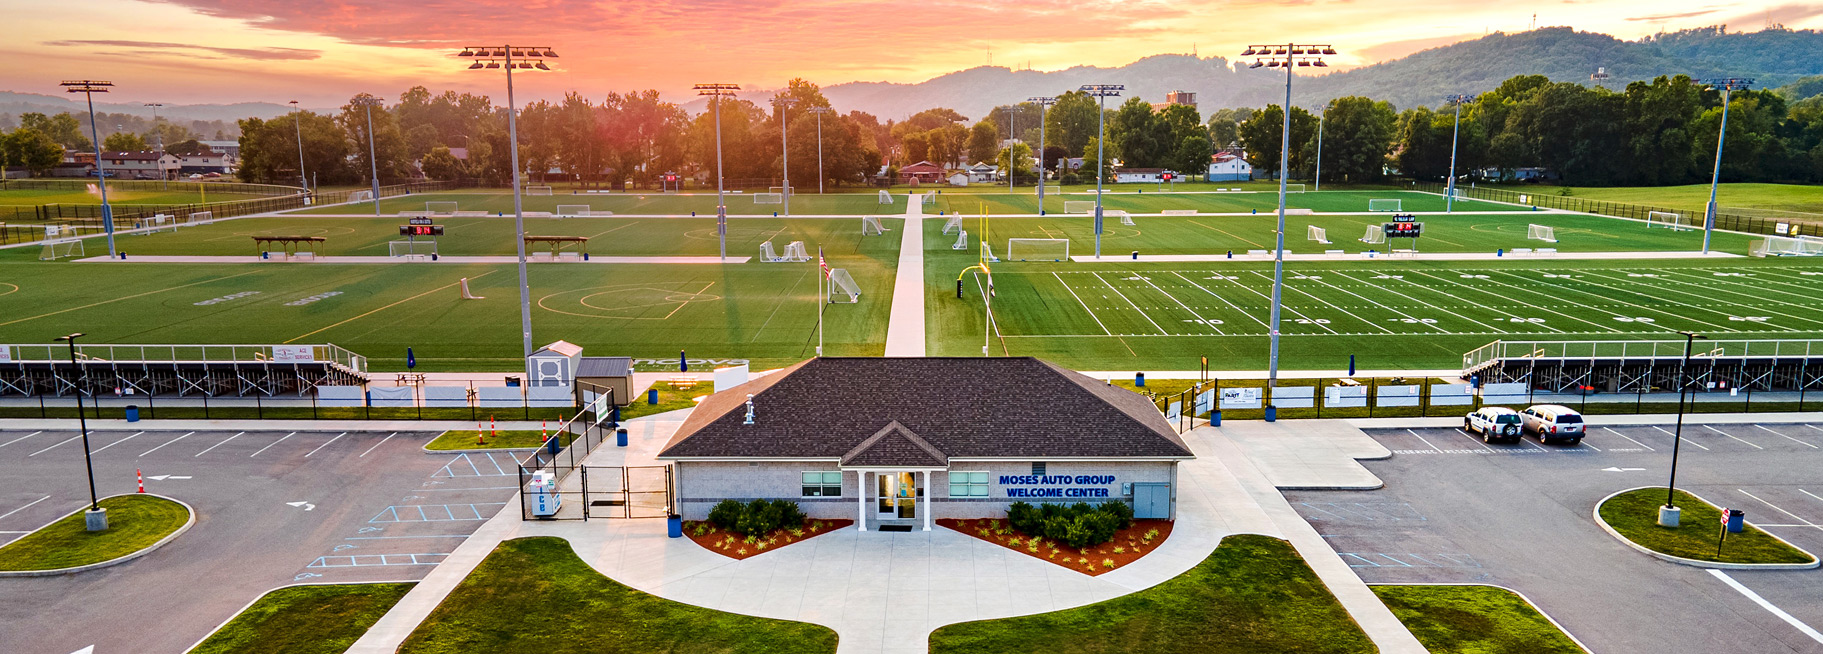 Shawnee Park Multi-Sport Complex